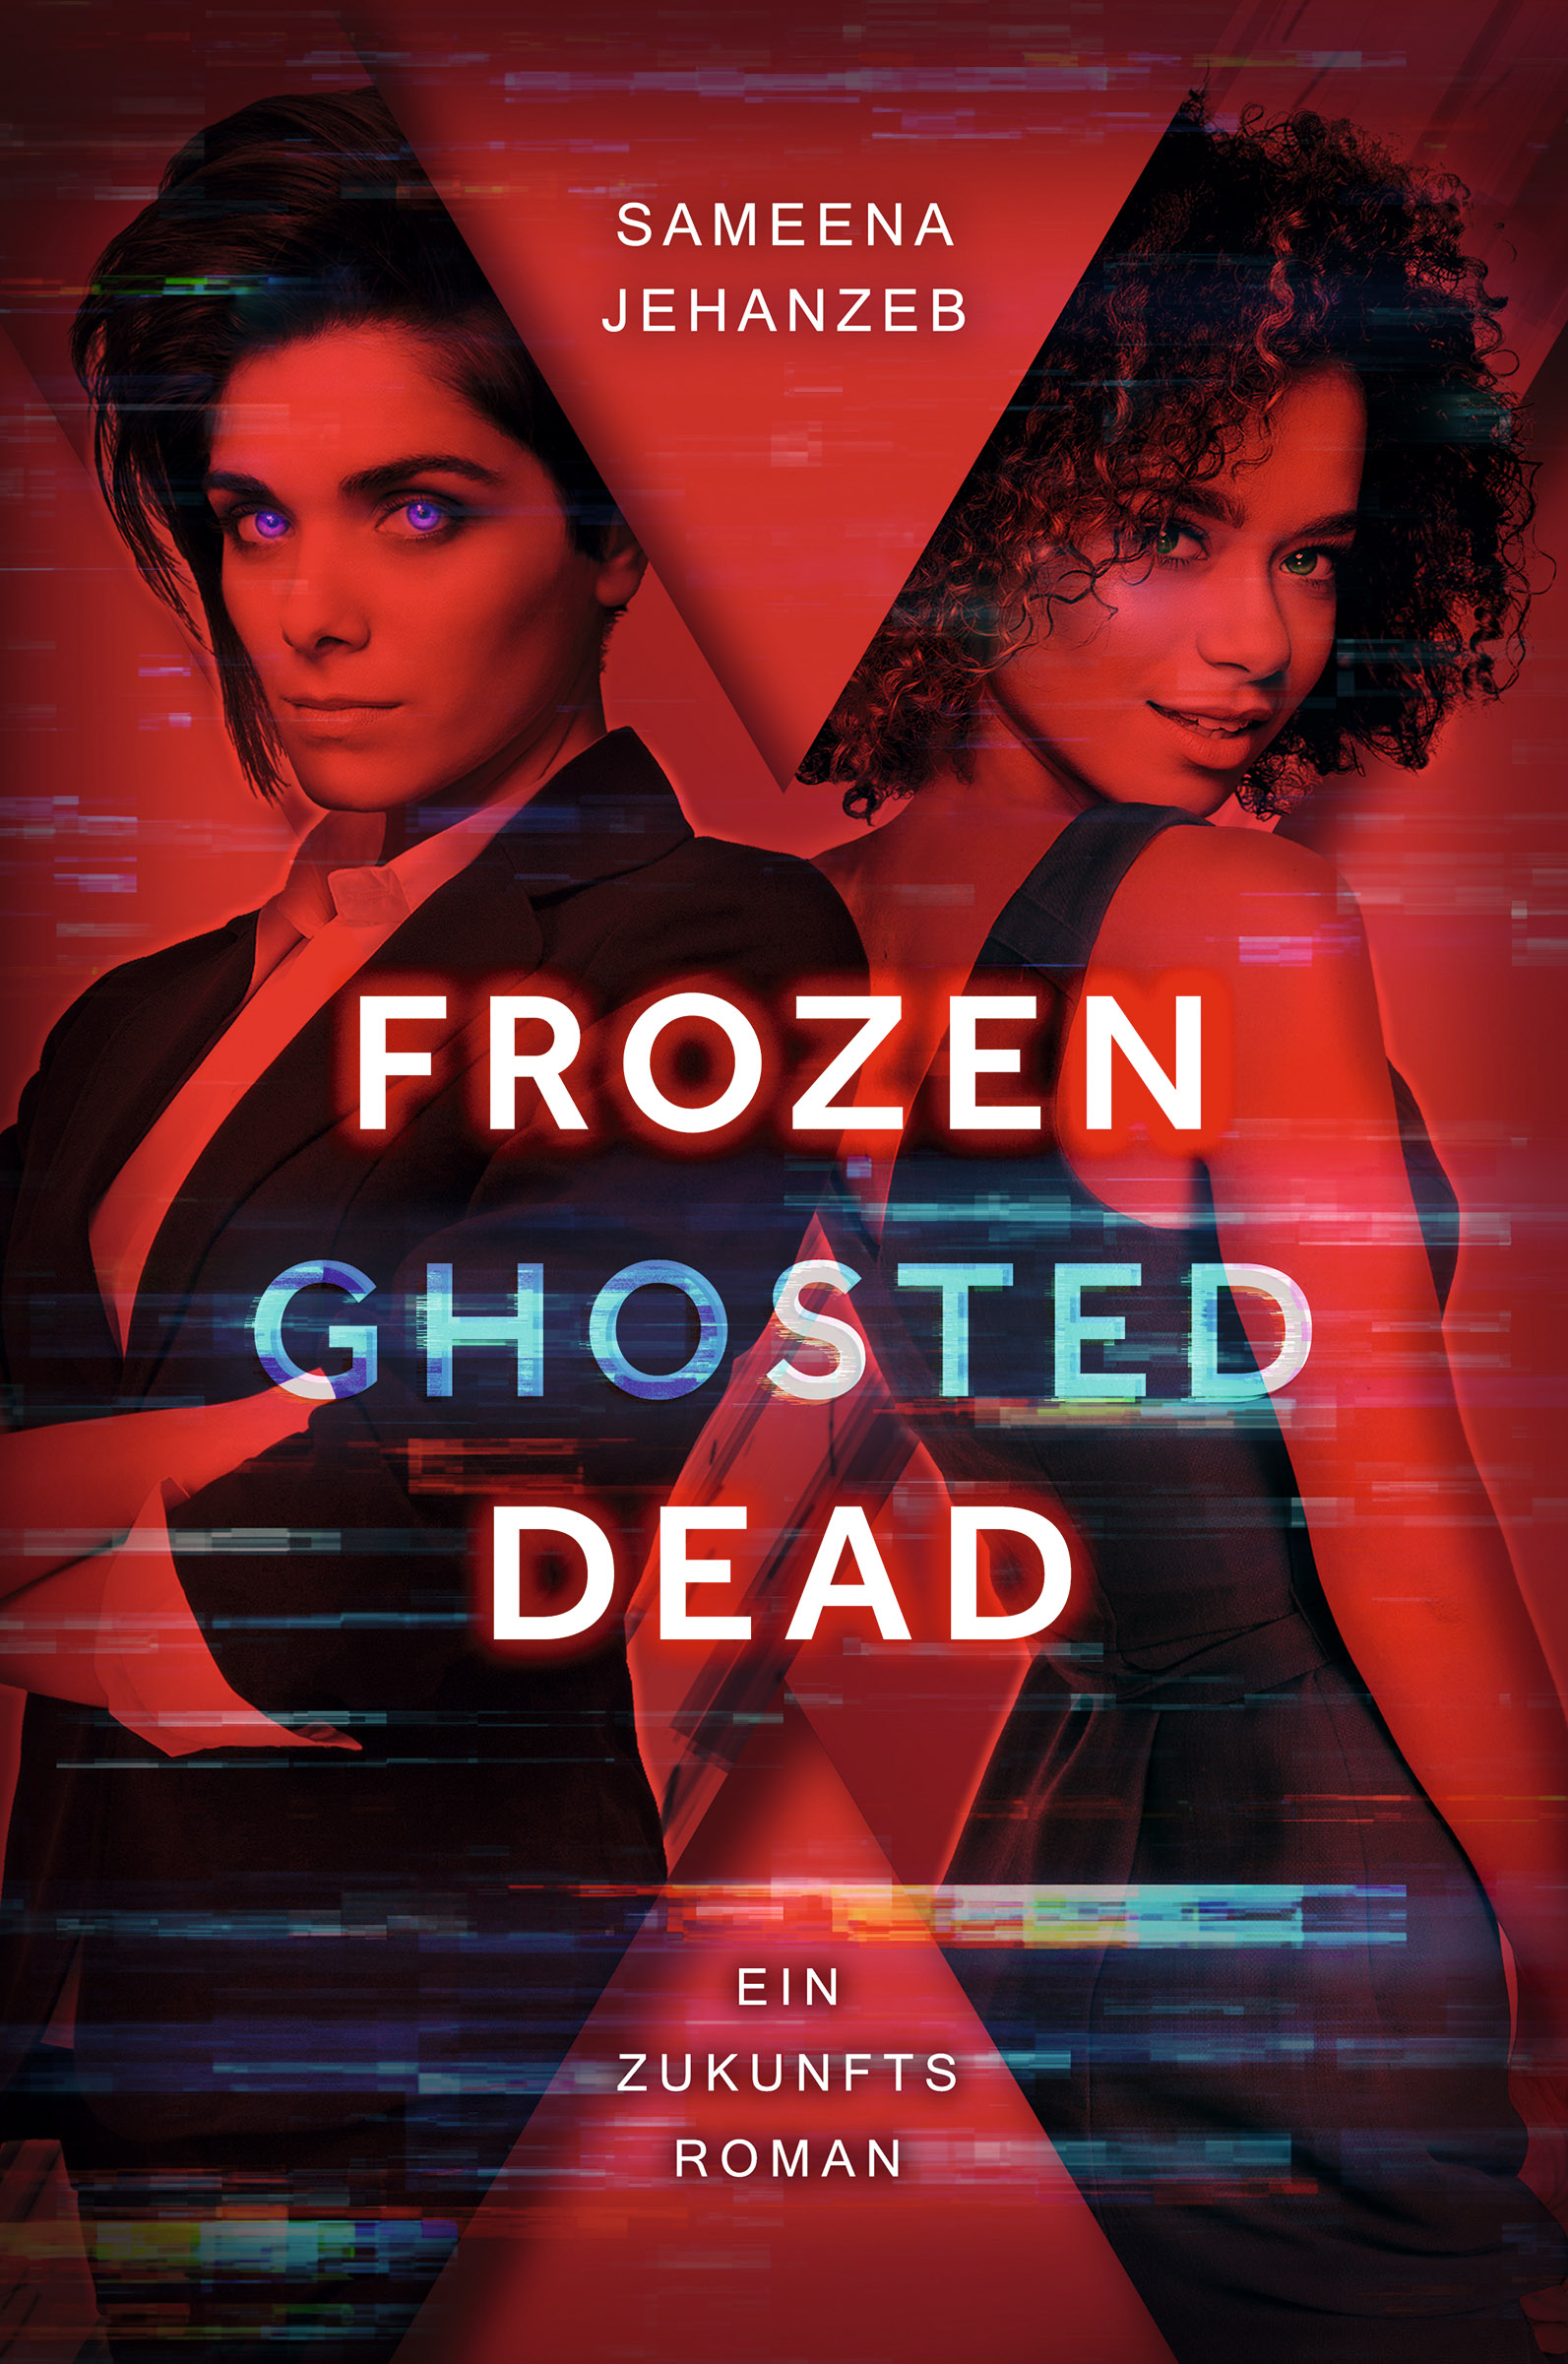 Buchcover: Frozen, Ghosted, Dead, 300 dpi